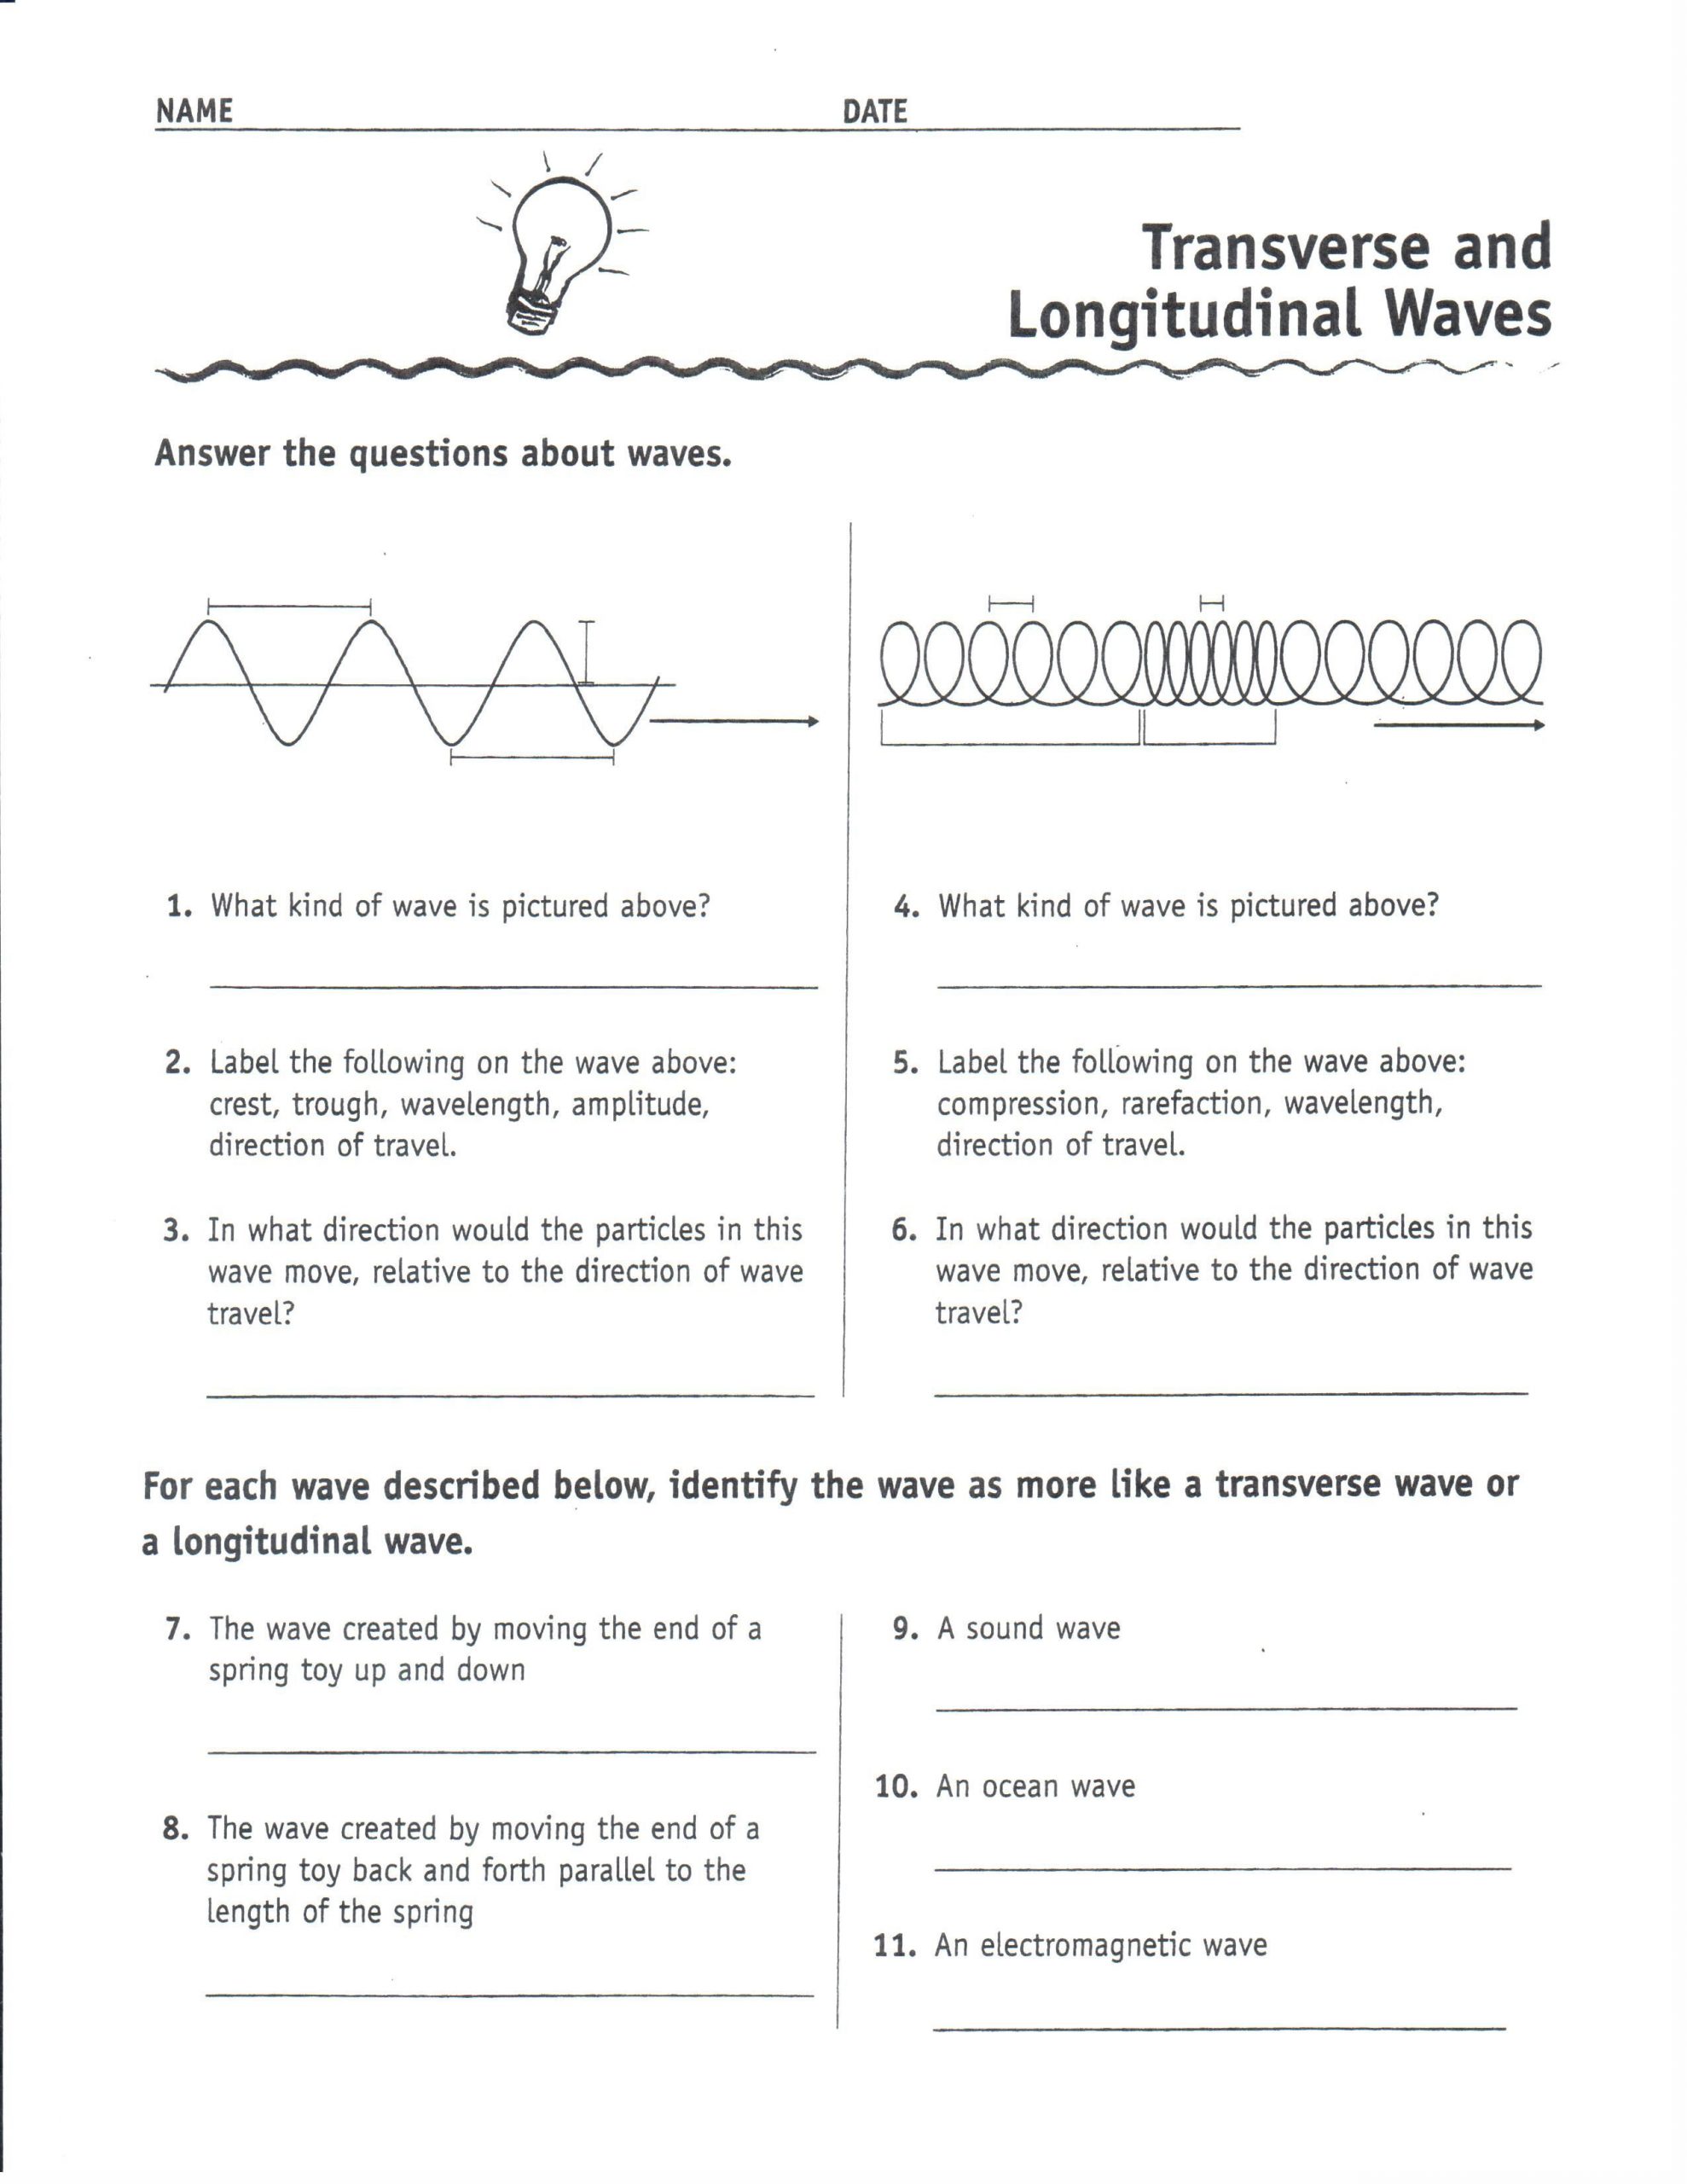 Wave Review Worksheet Answer Key Physical Science Transverse and Longitudinal Waves 1uyxl0i